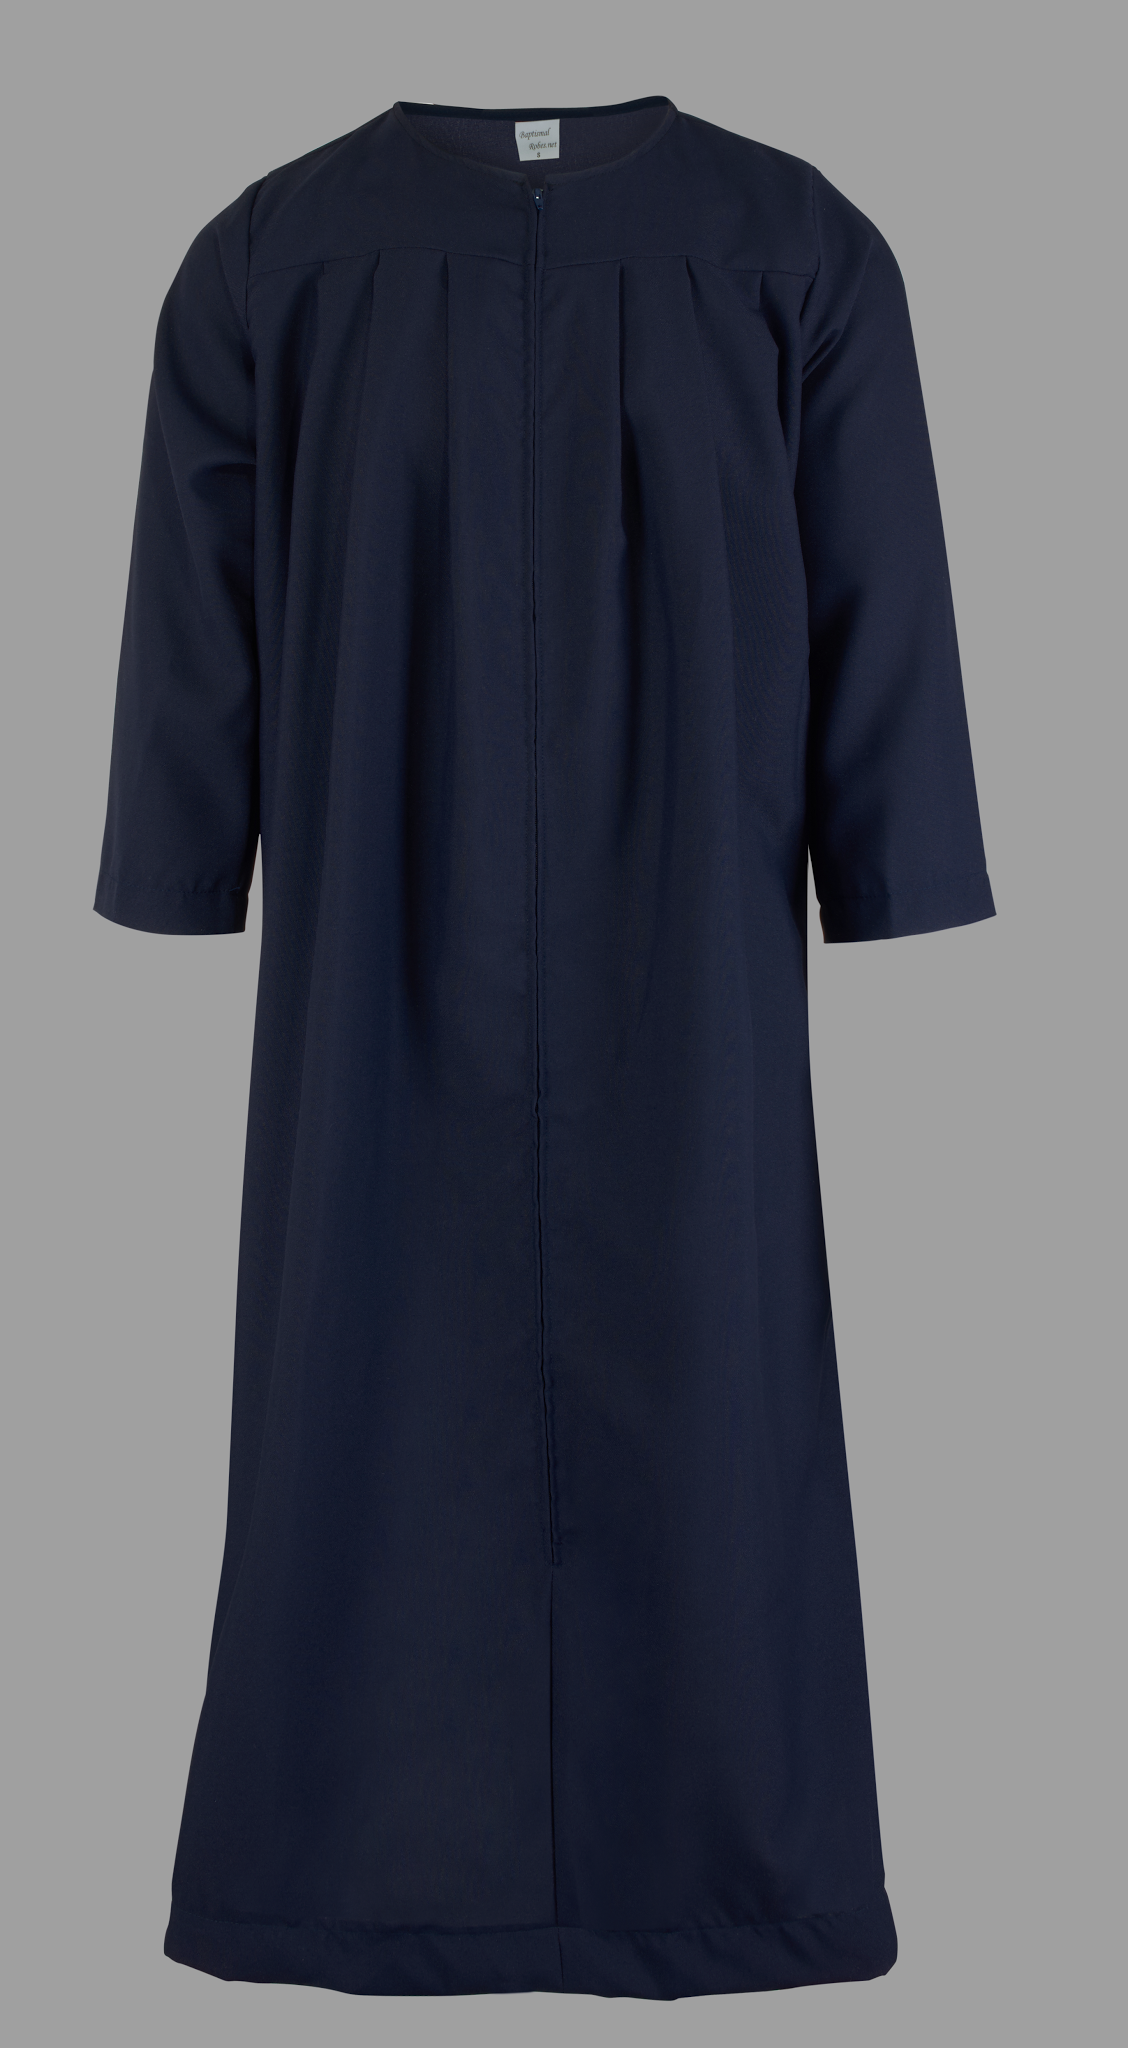 Traditional BlackWhite Baptismal Robes for Adults  IvyRobes  Ivyrobes